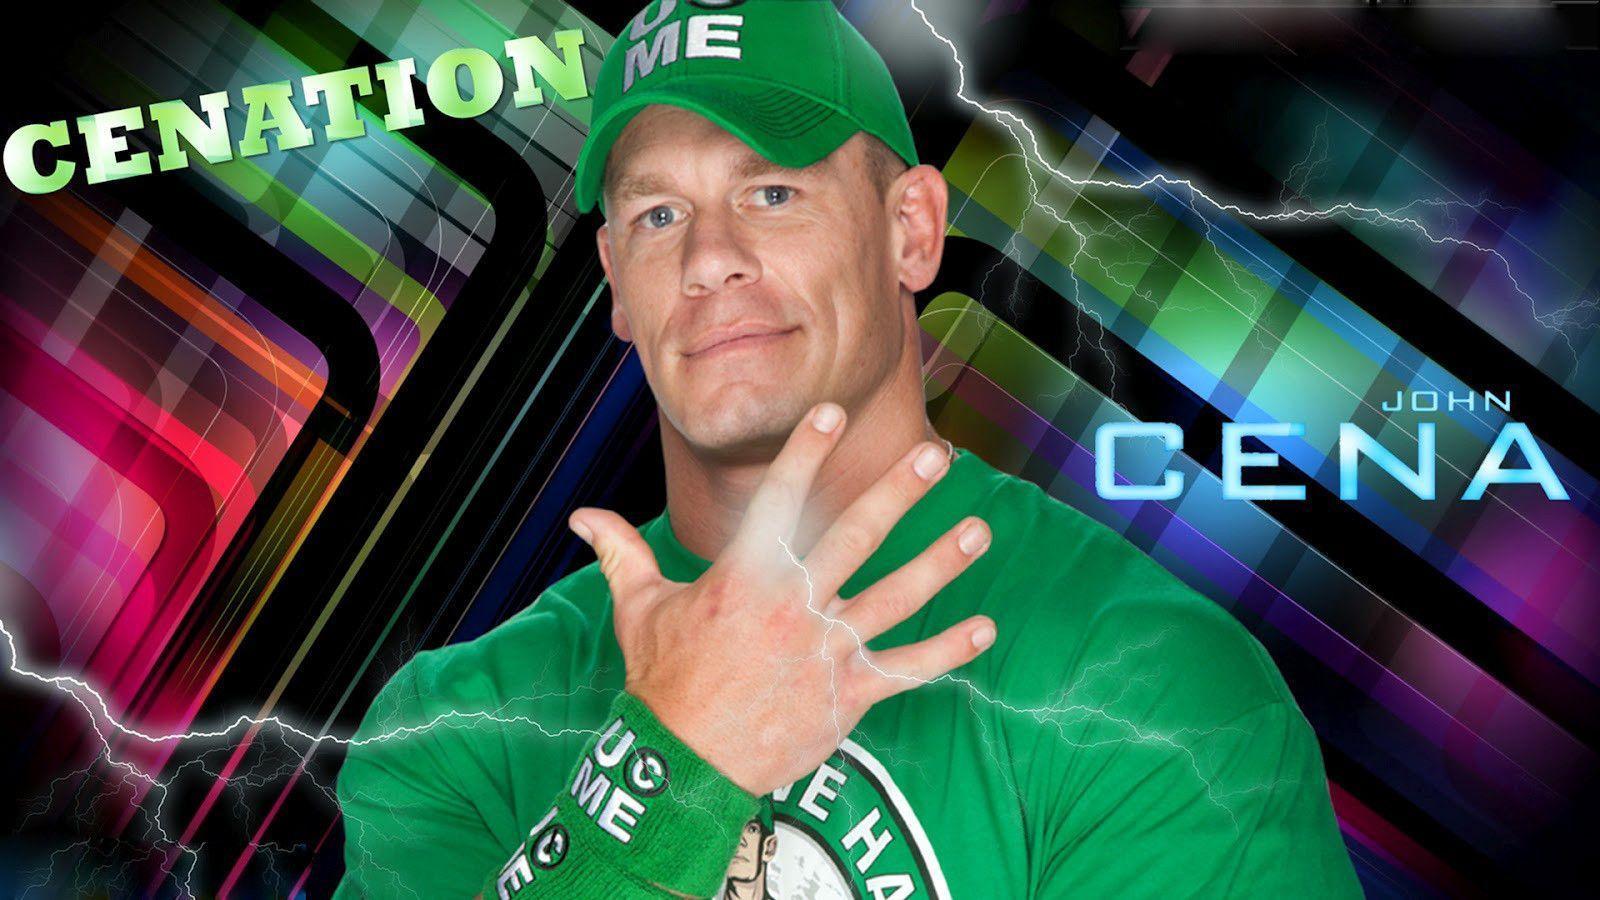 John Cena Wallpaper Free Download. HD Free Wallpaper Download